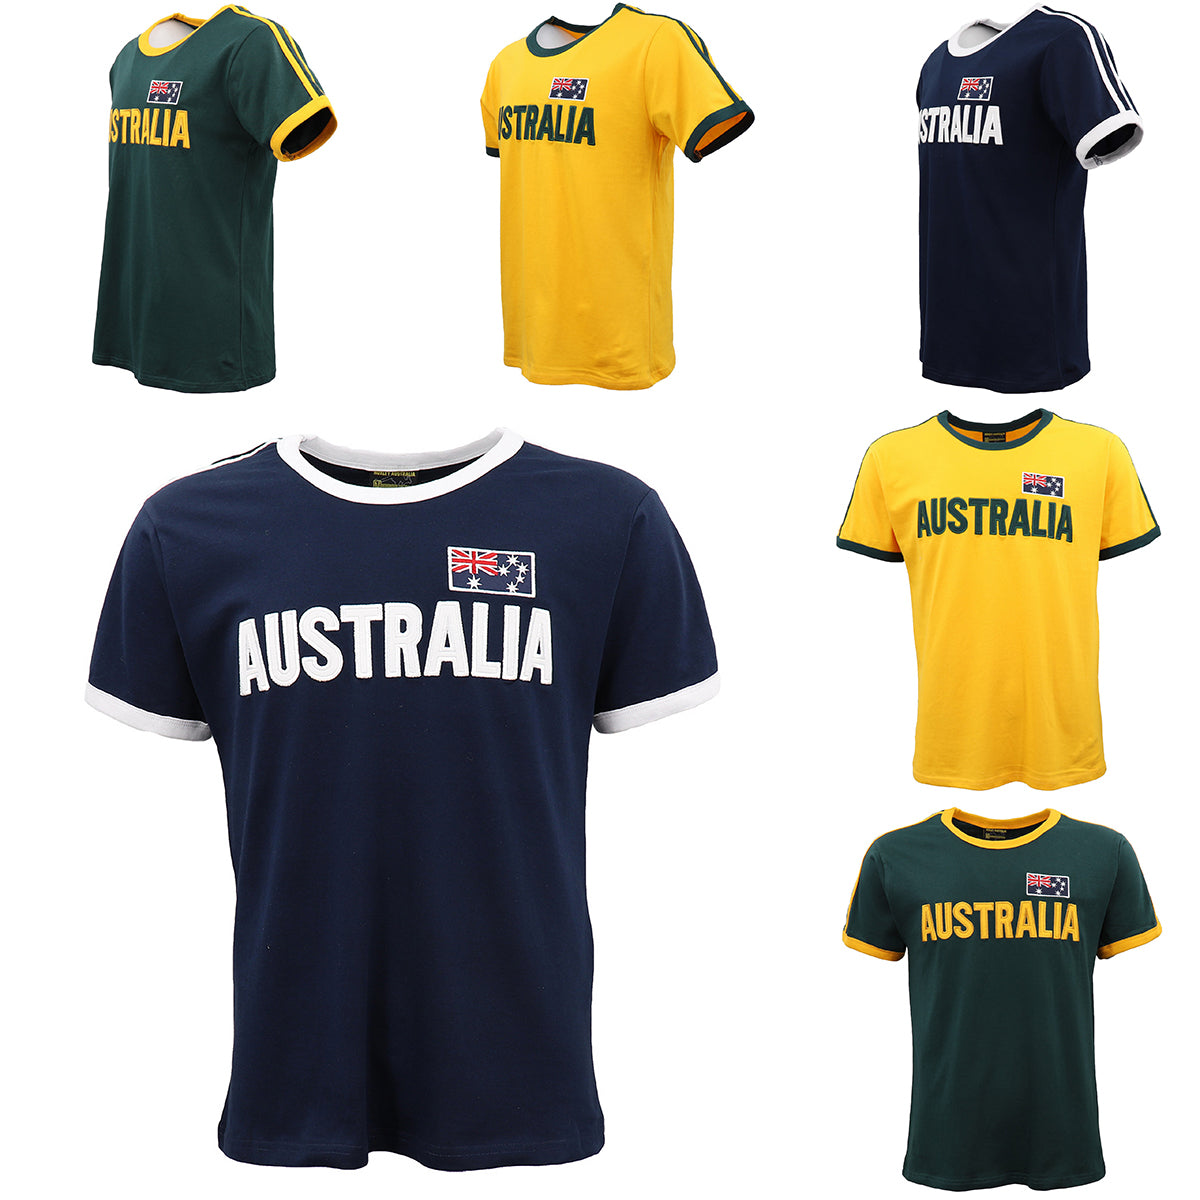 Adult 100% Cotton T-Shirt Australia Day w Flag Stripes Tee Tops Souvenir Gift - Zmart Australia